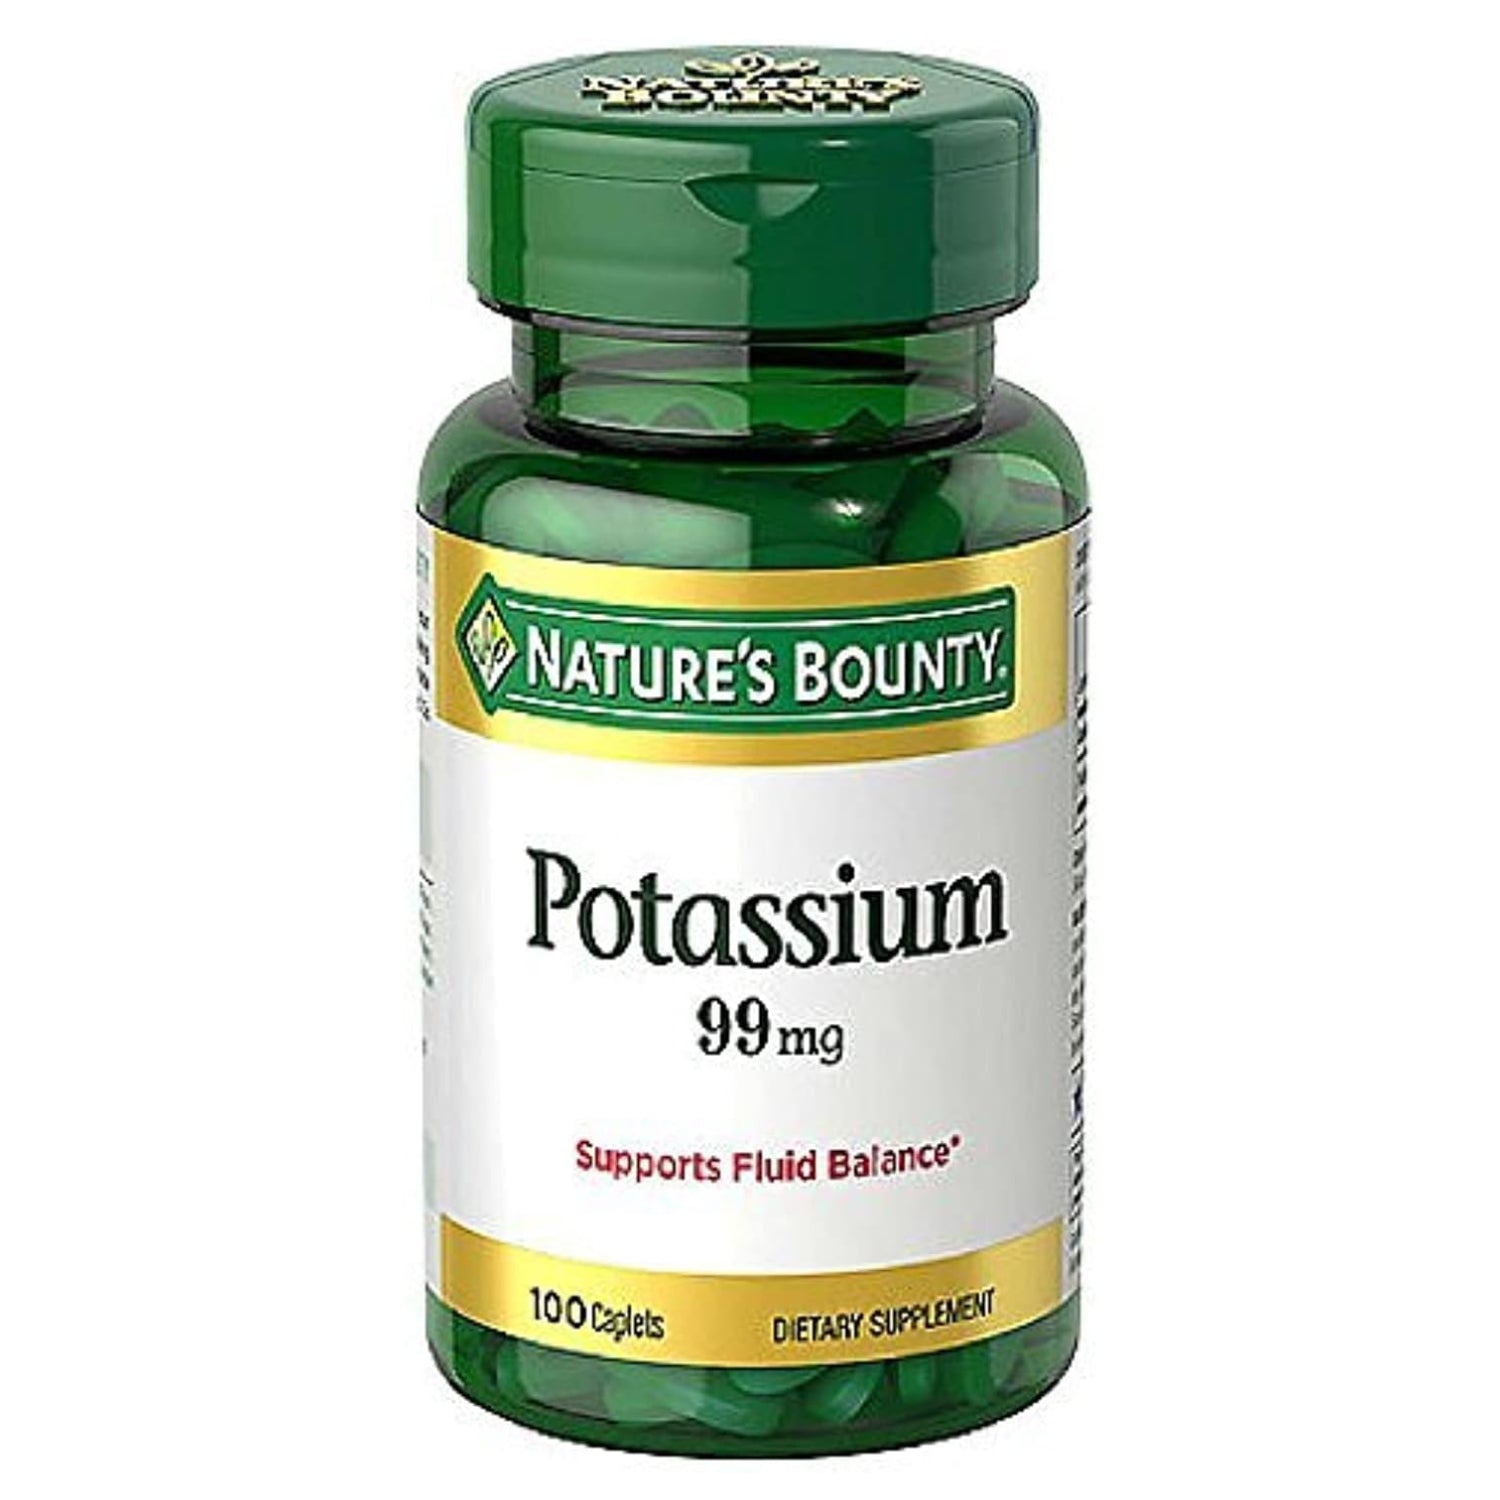 Nature's Bounty Potassium 99mg Caplets 100's